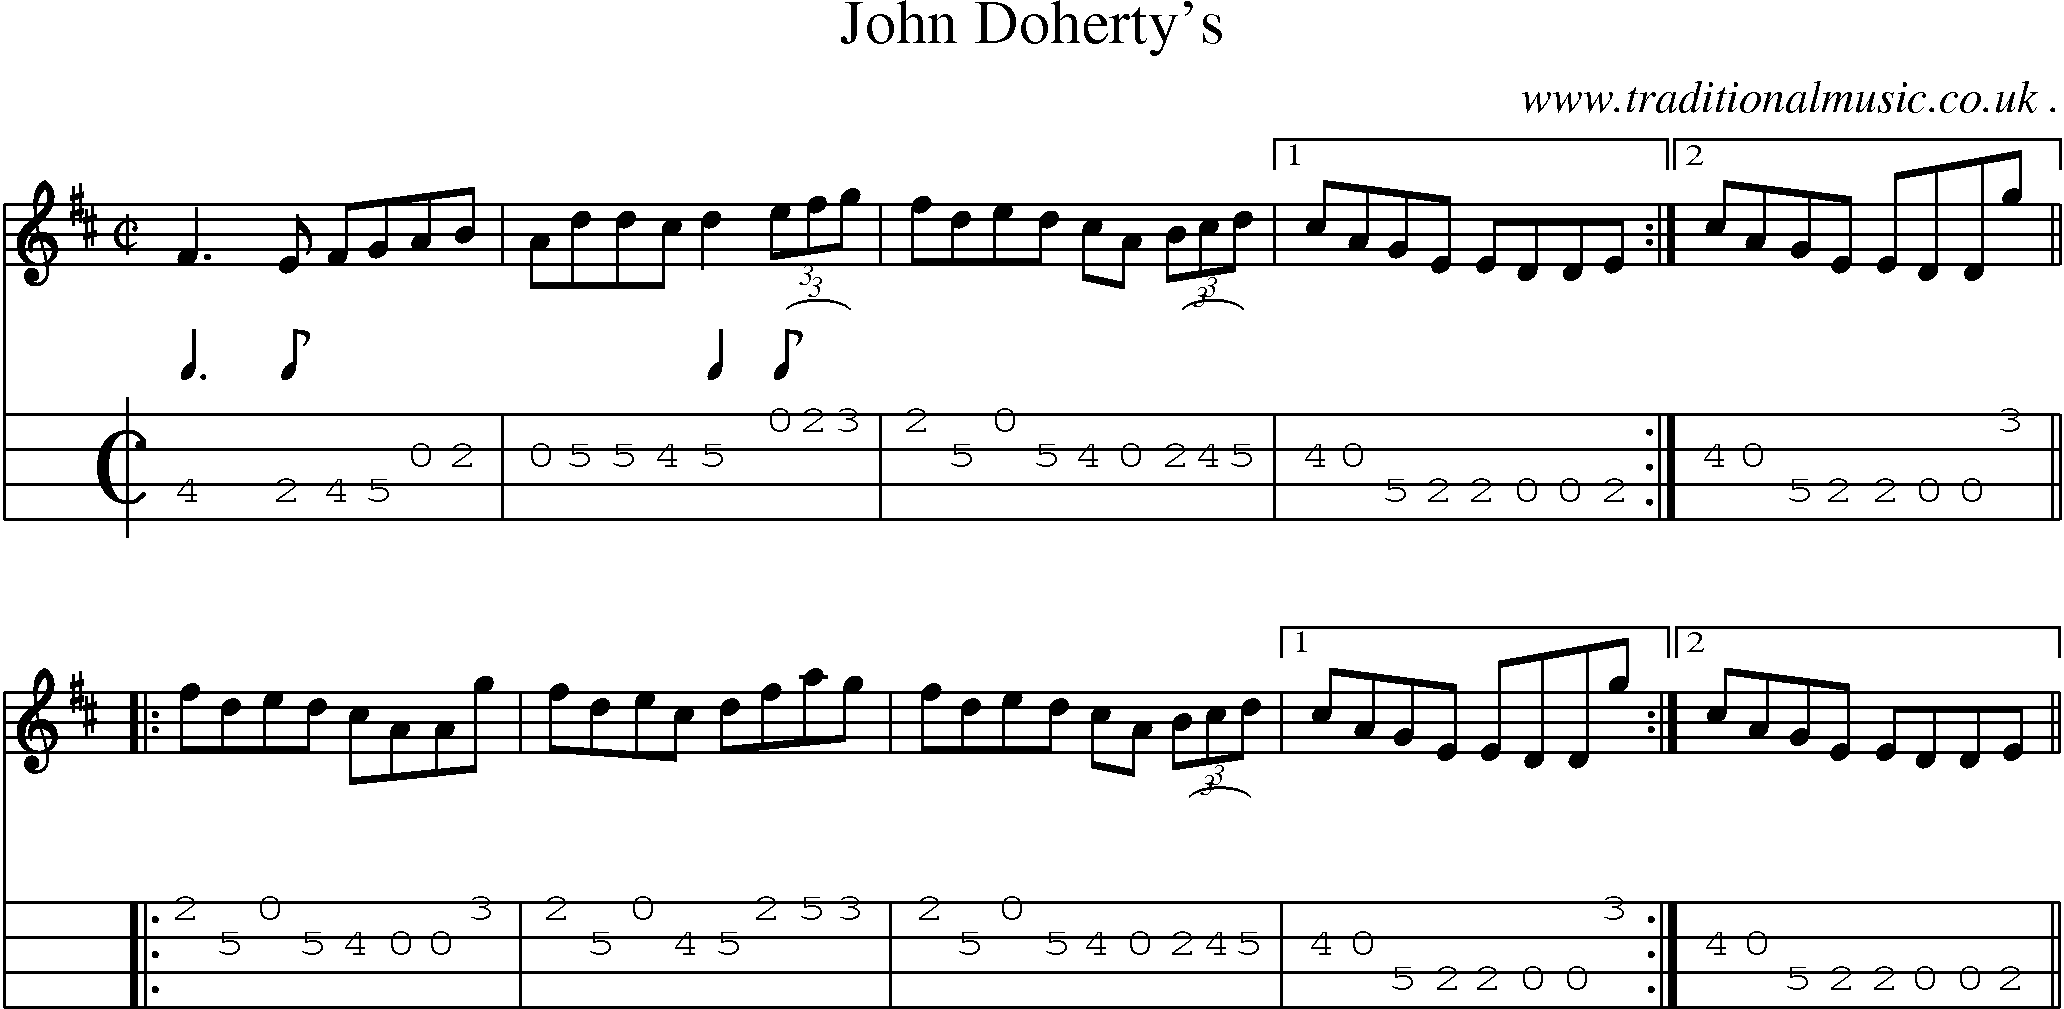 Sheet-Music and Mandolin Tabs for John Dohertys